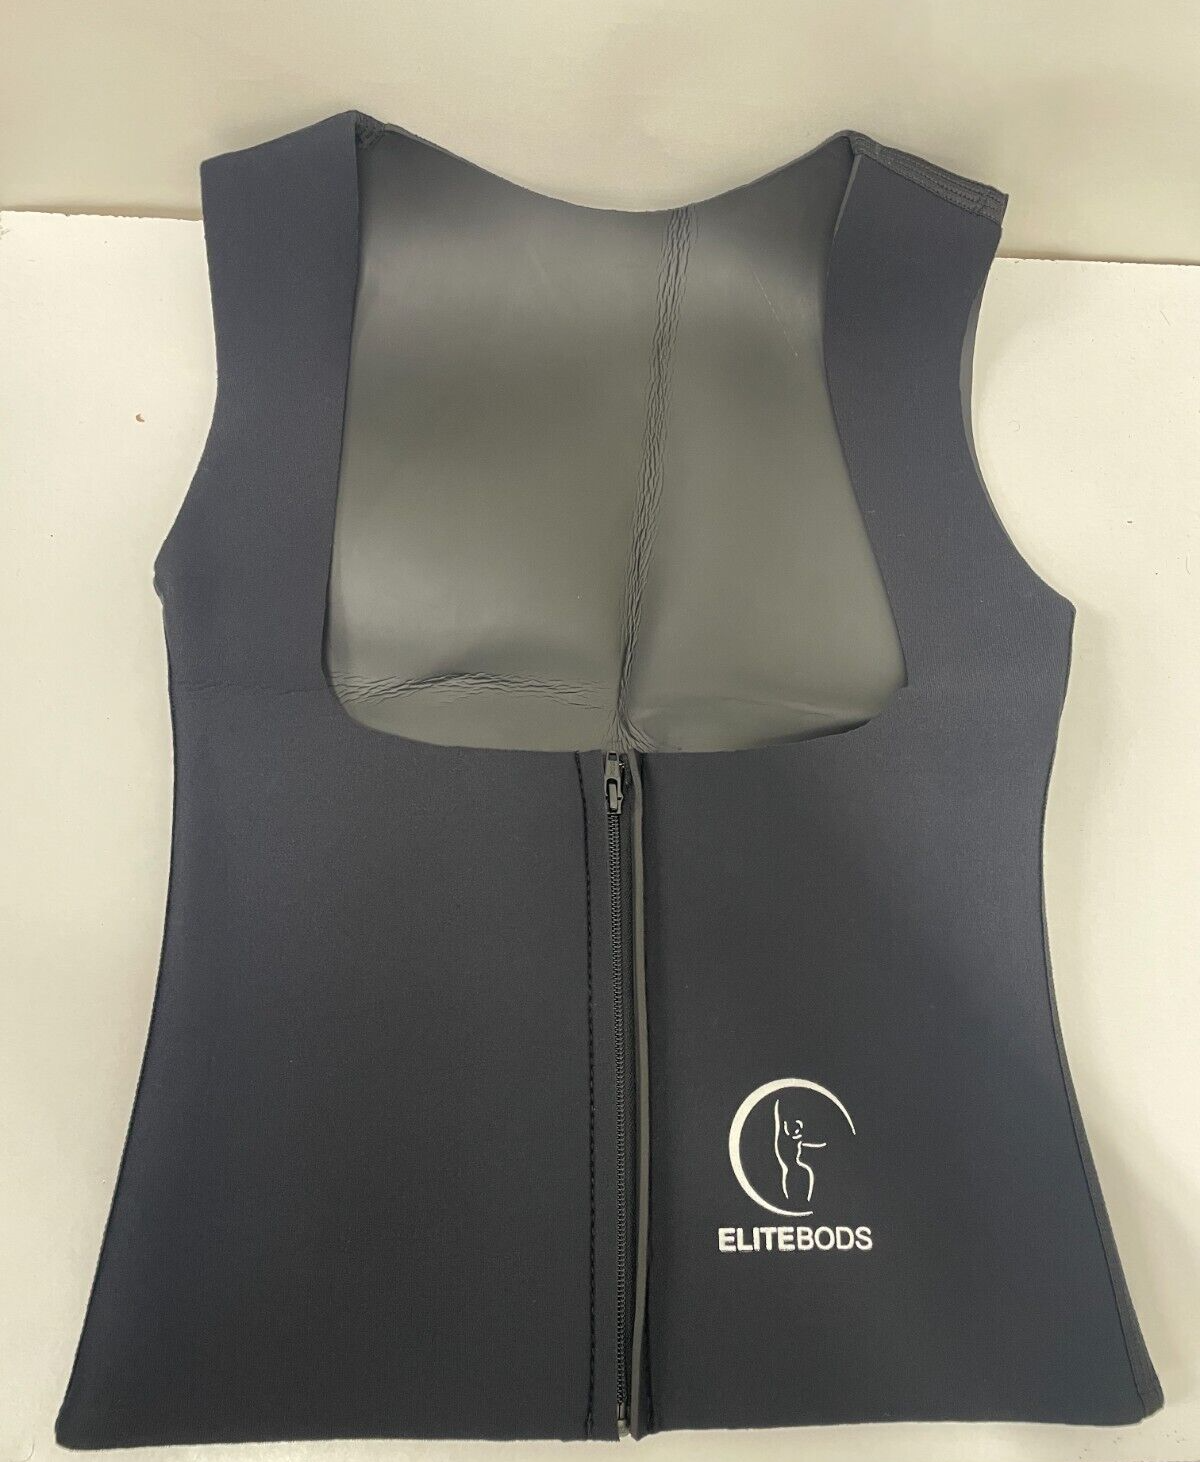 Elitebods Women's M Chaleco Waist Trainer Sweat Vest Black Workout Thermogenic